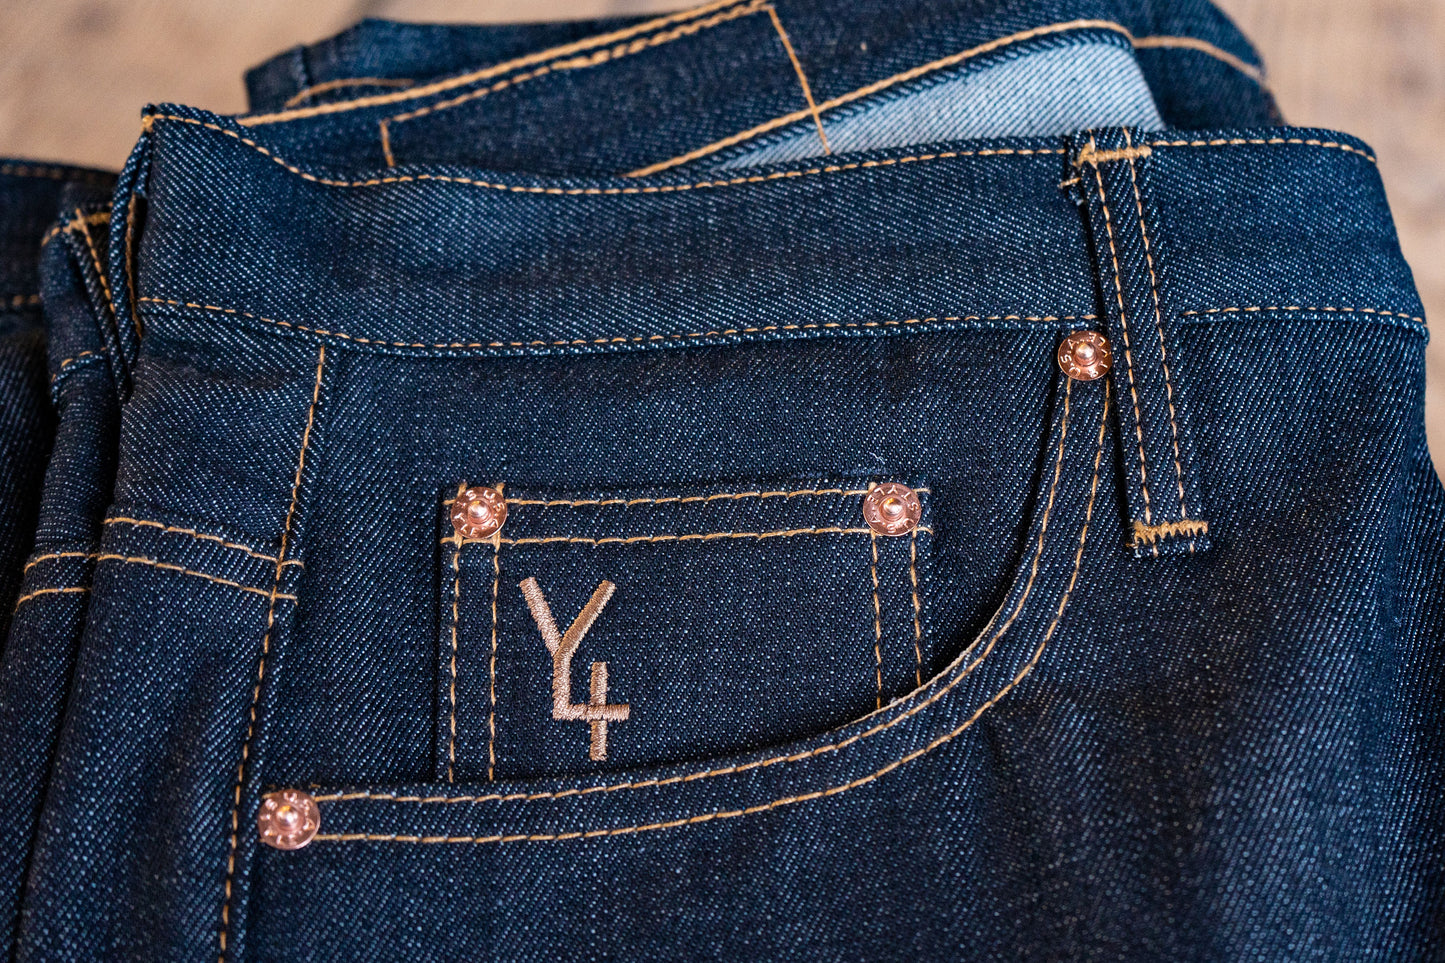 Branded Denim Style 101 Jeans